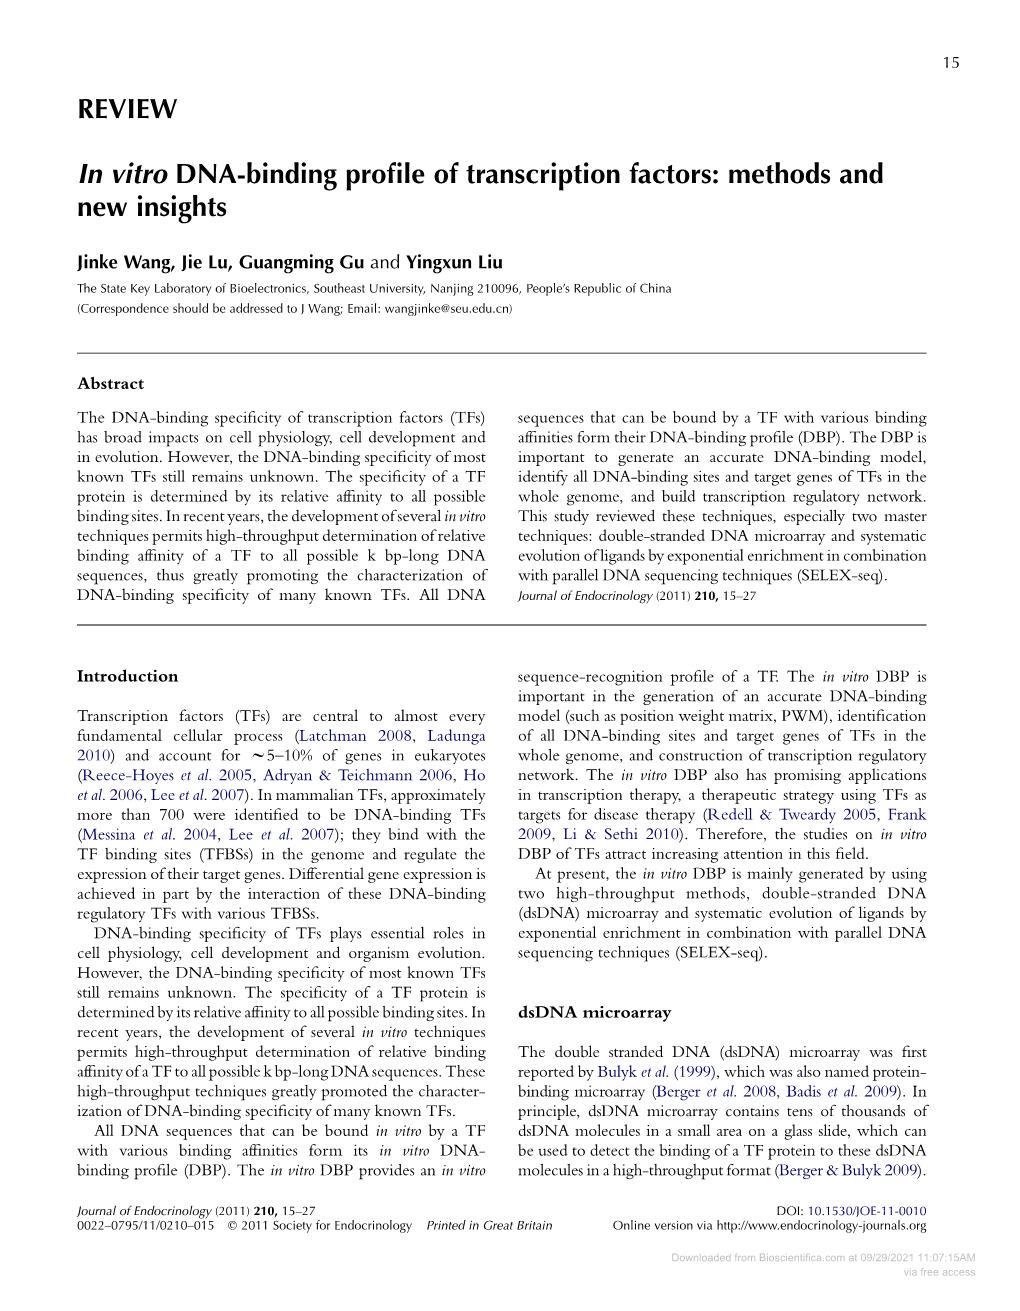 REVIEW in Vitro DNA-Binding Profile of Transcription Factors